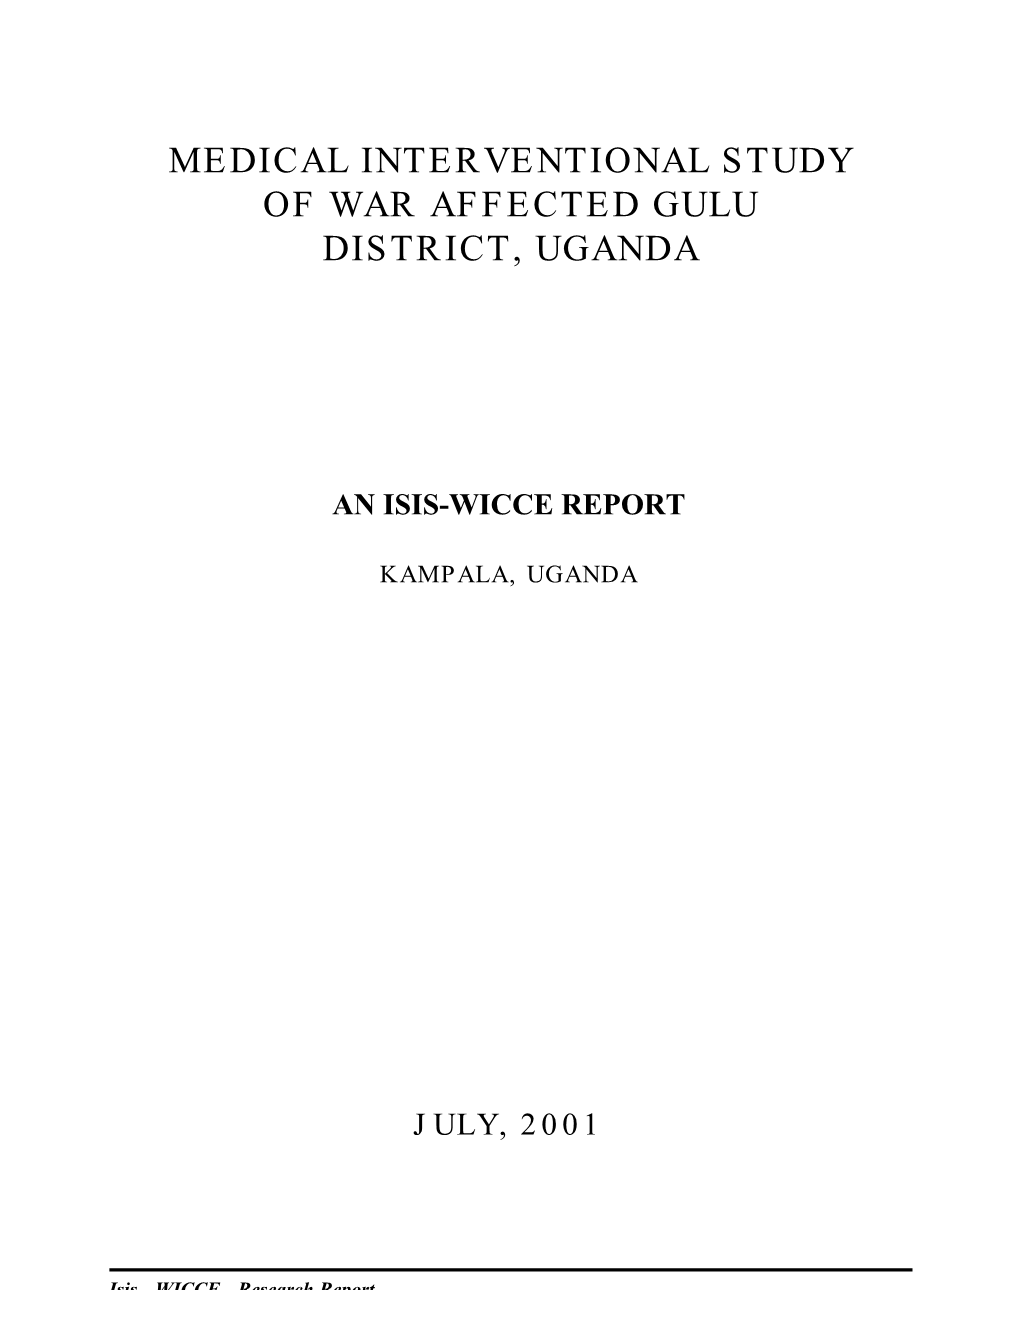 Medical Interventional Study of War Affected Gulu District, Uganda